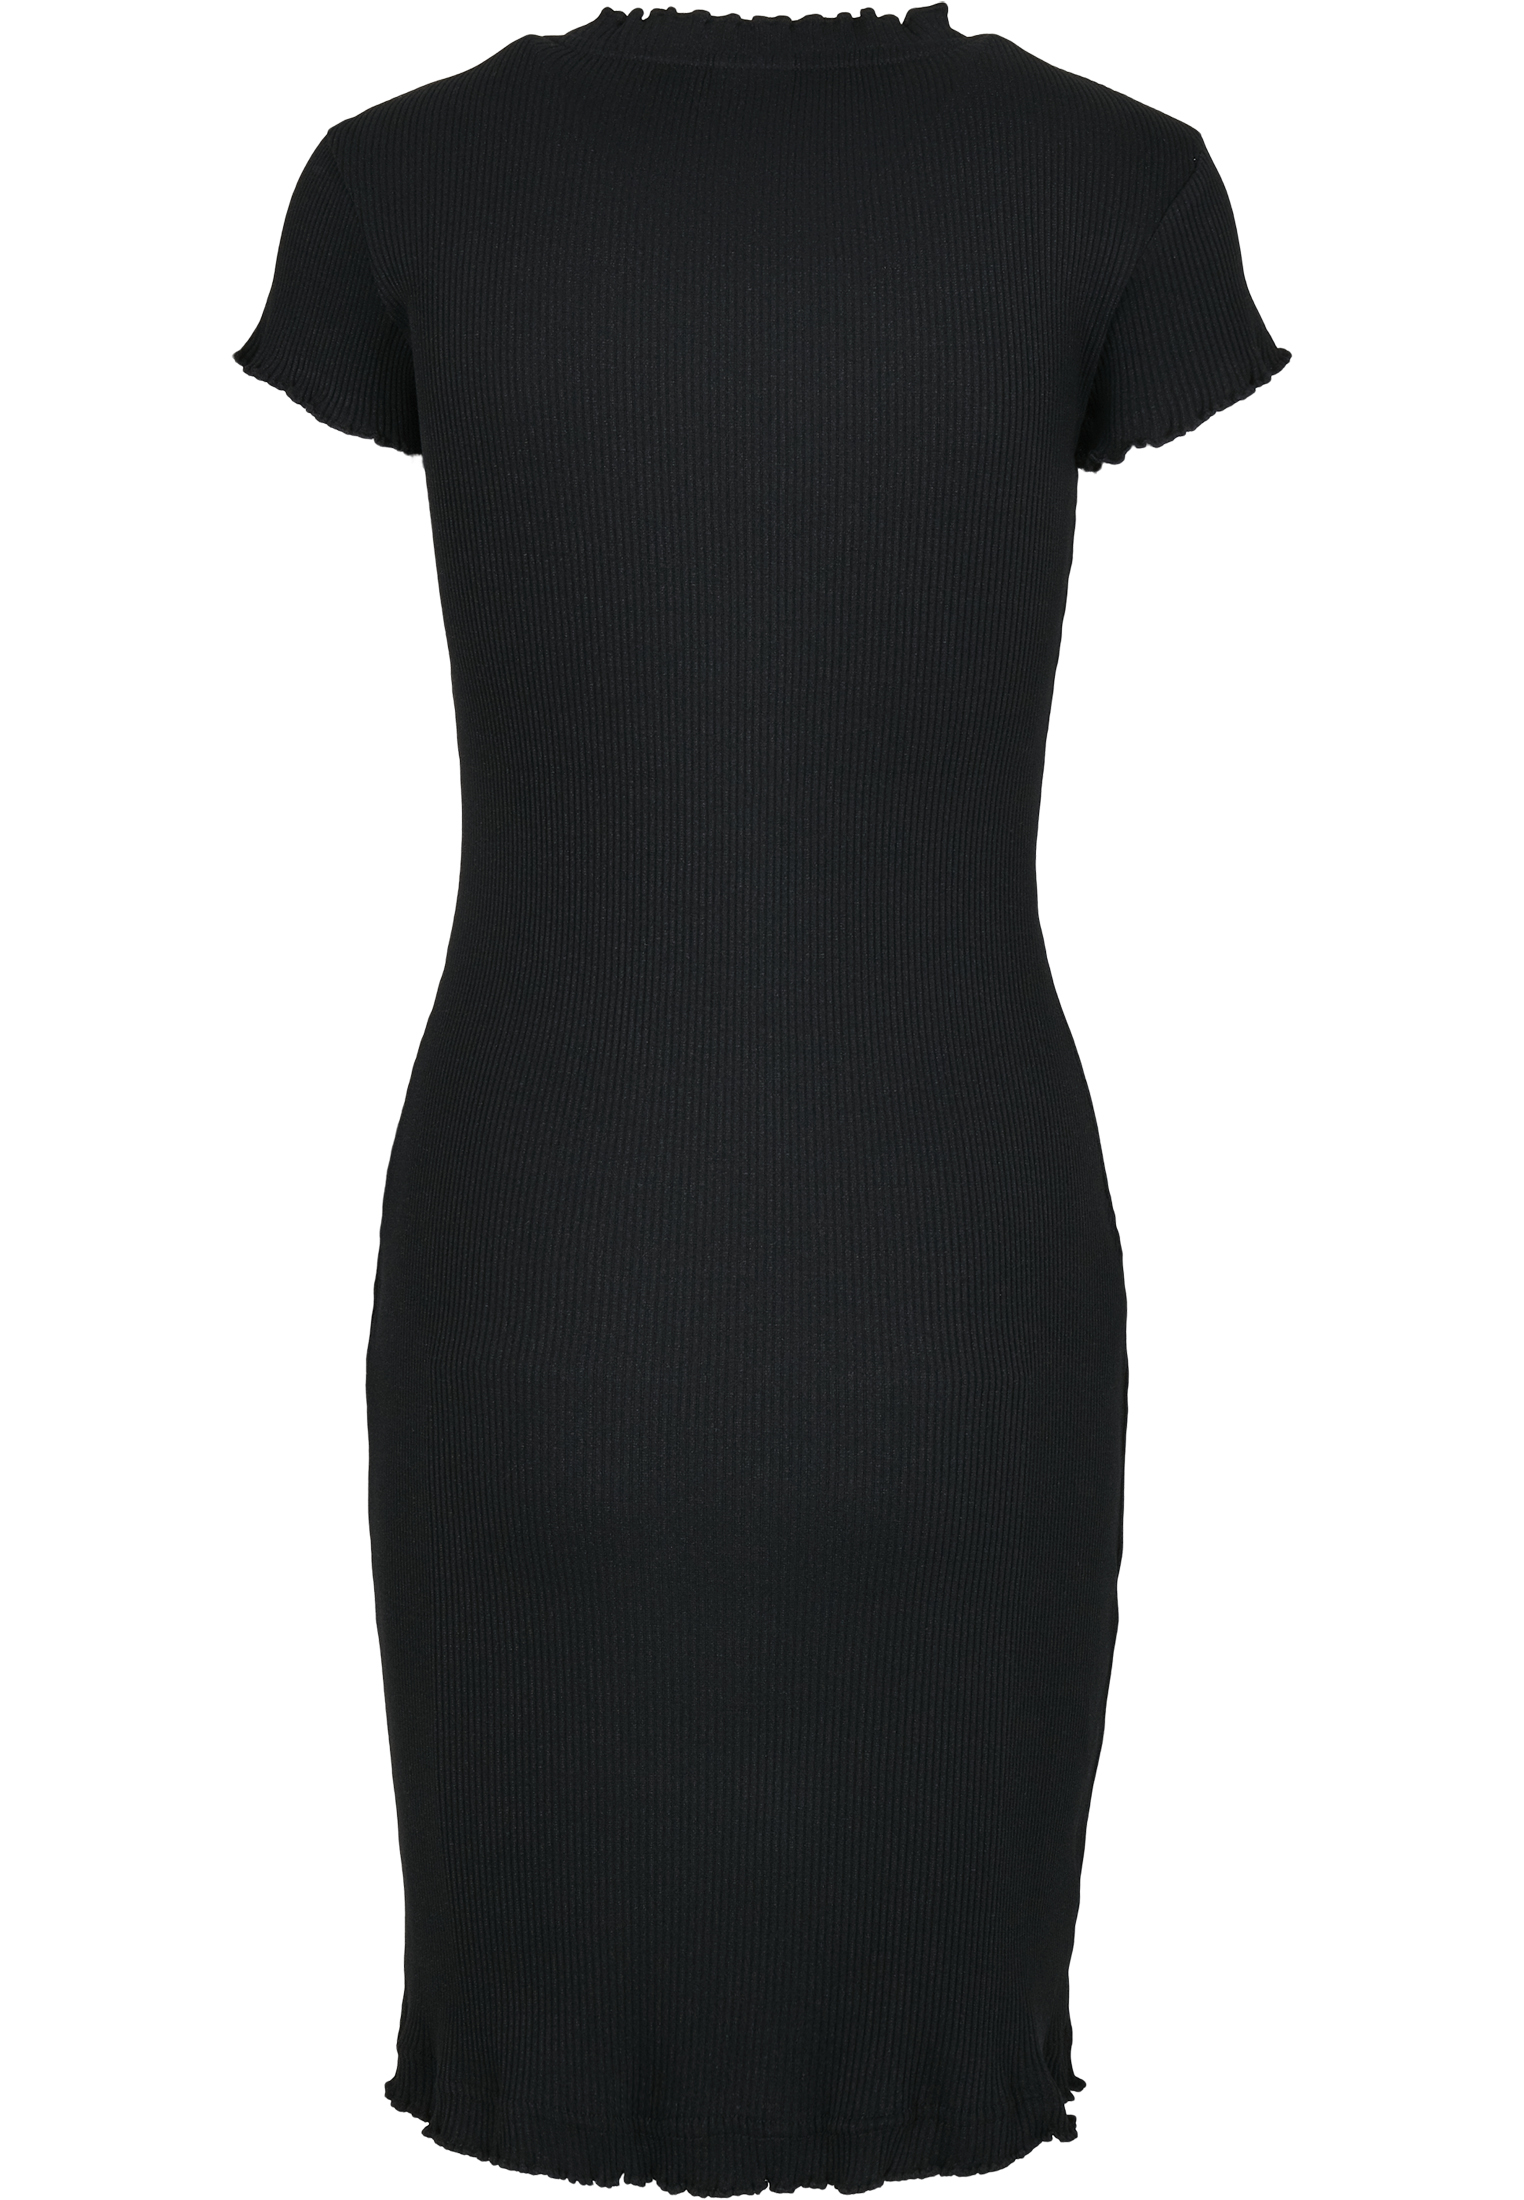 Curvy Ladies Rib Tee Dress in Farbe black